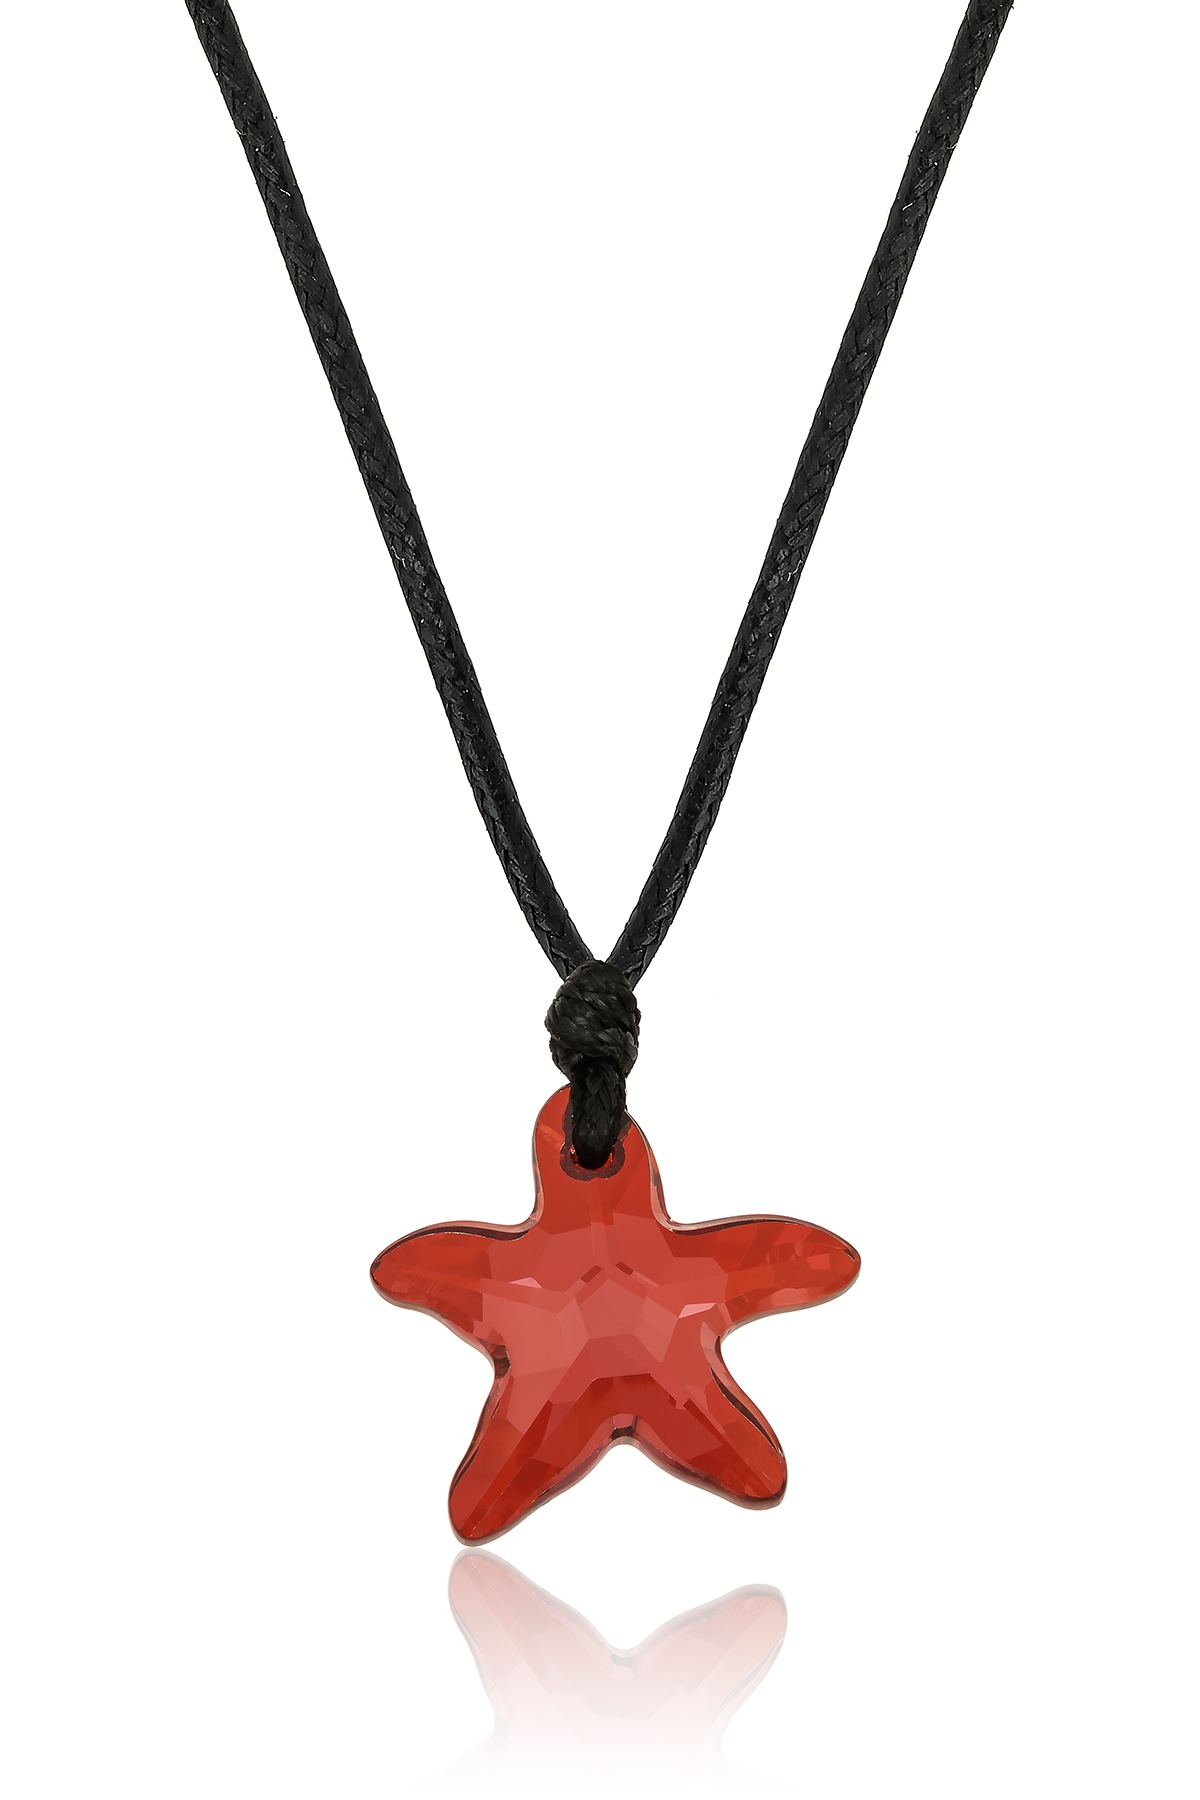 Swarovski® 6721 Starfish Red Magma İpli Kolye